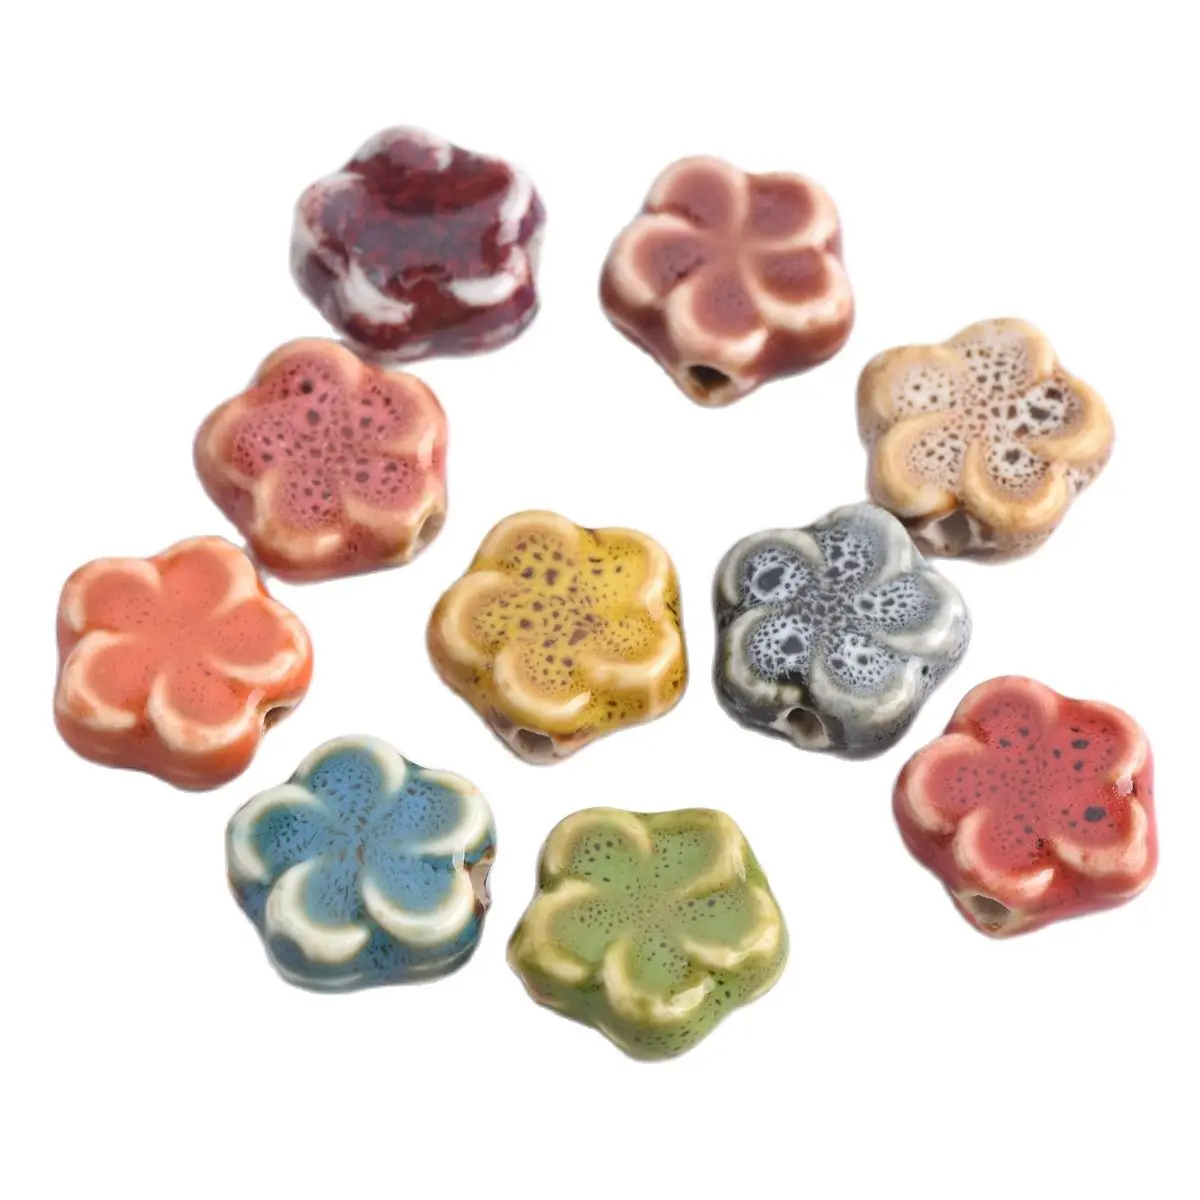 

10pcs Flower Shape 16mm Handmade Fancy Glaze Ceramic Porcelain Loose Spacer Beads lot for Jewelry Making DIY Crafts Findings